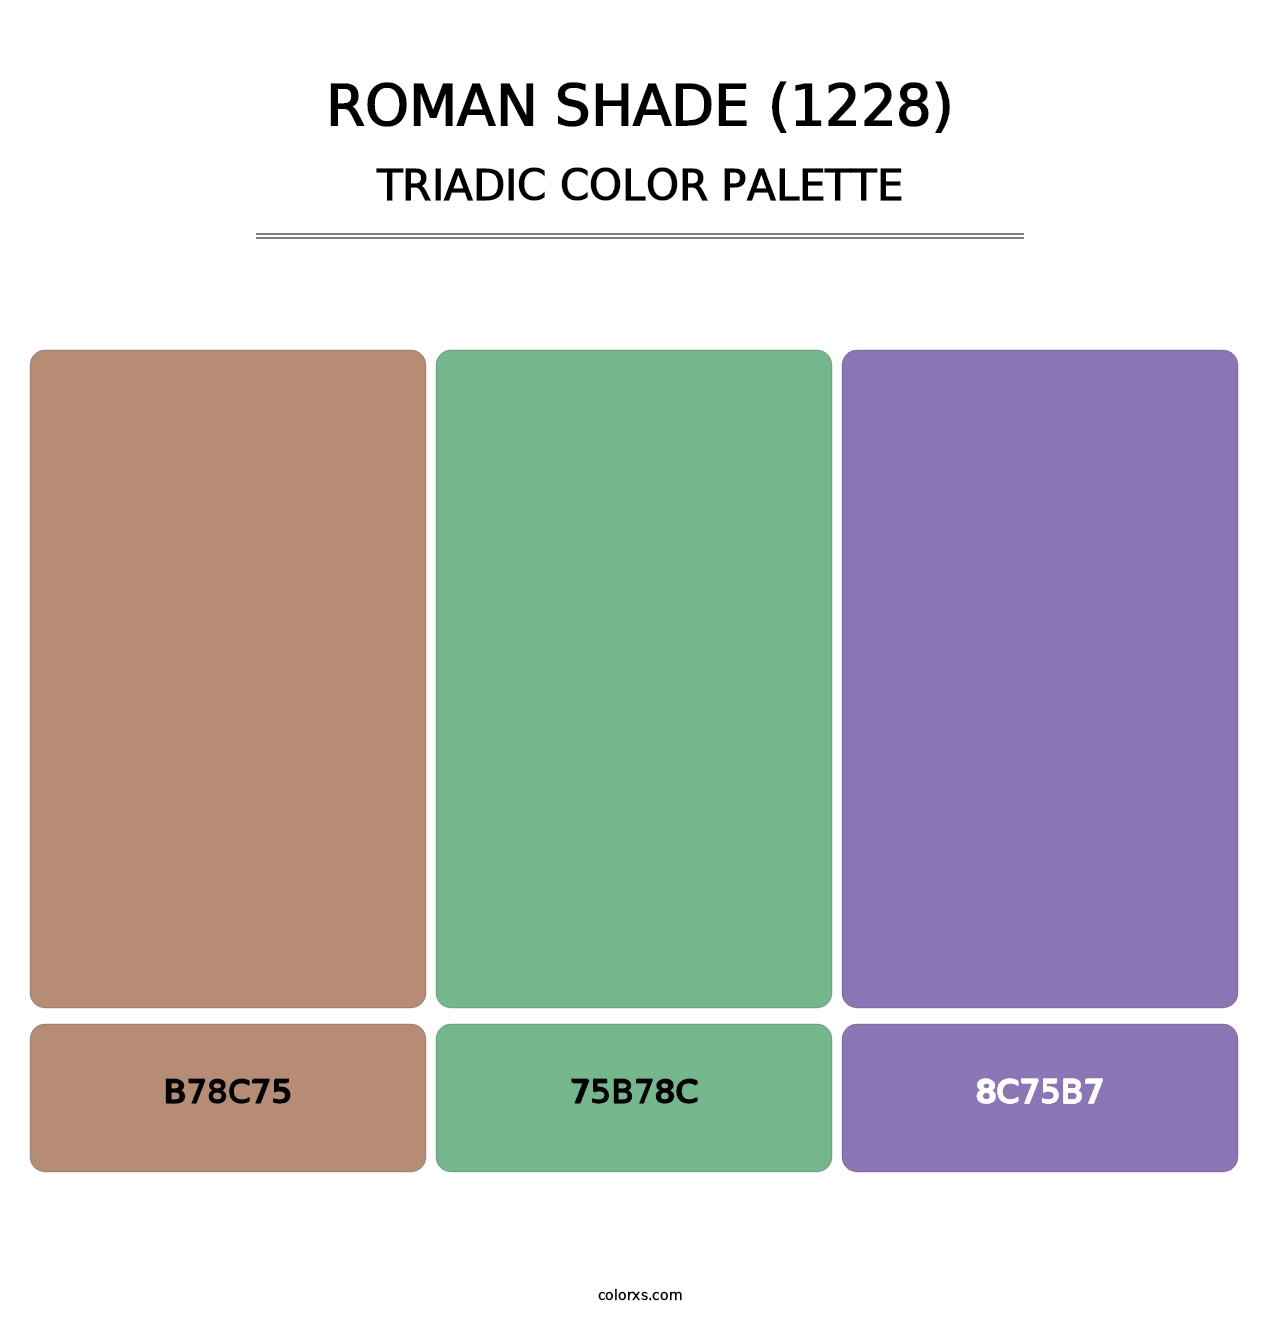 Roman Shade (1228) - Triadic Color Palette